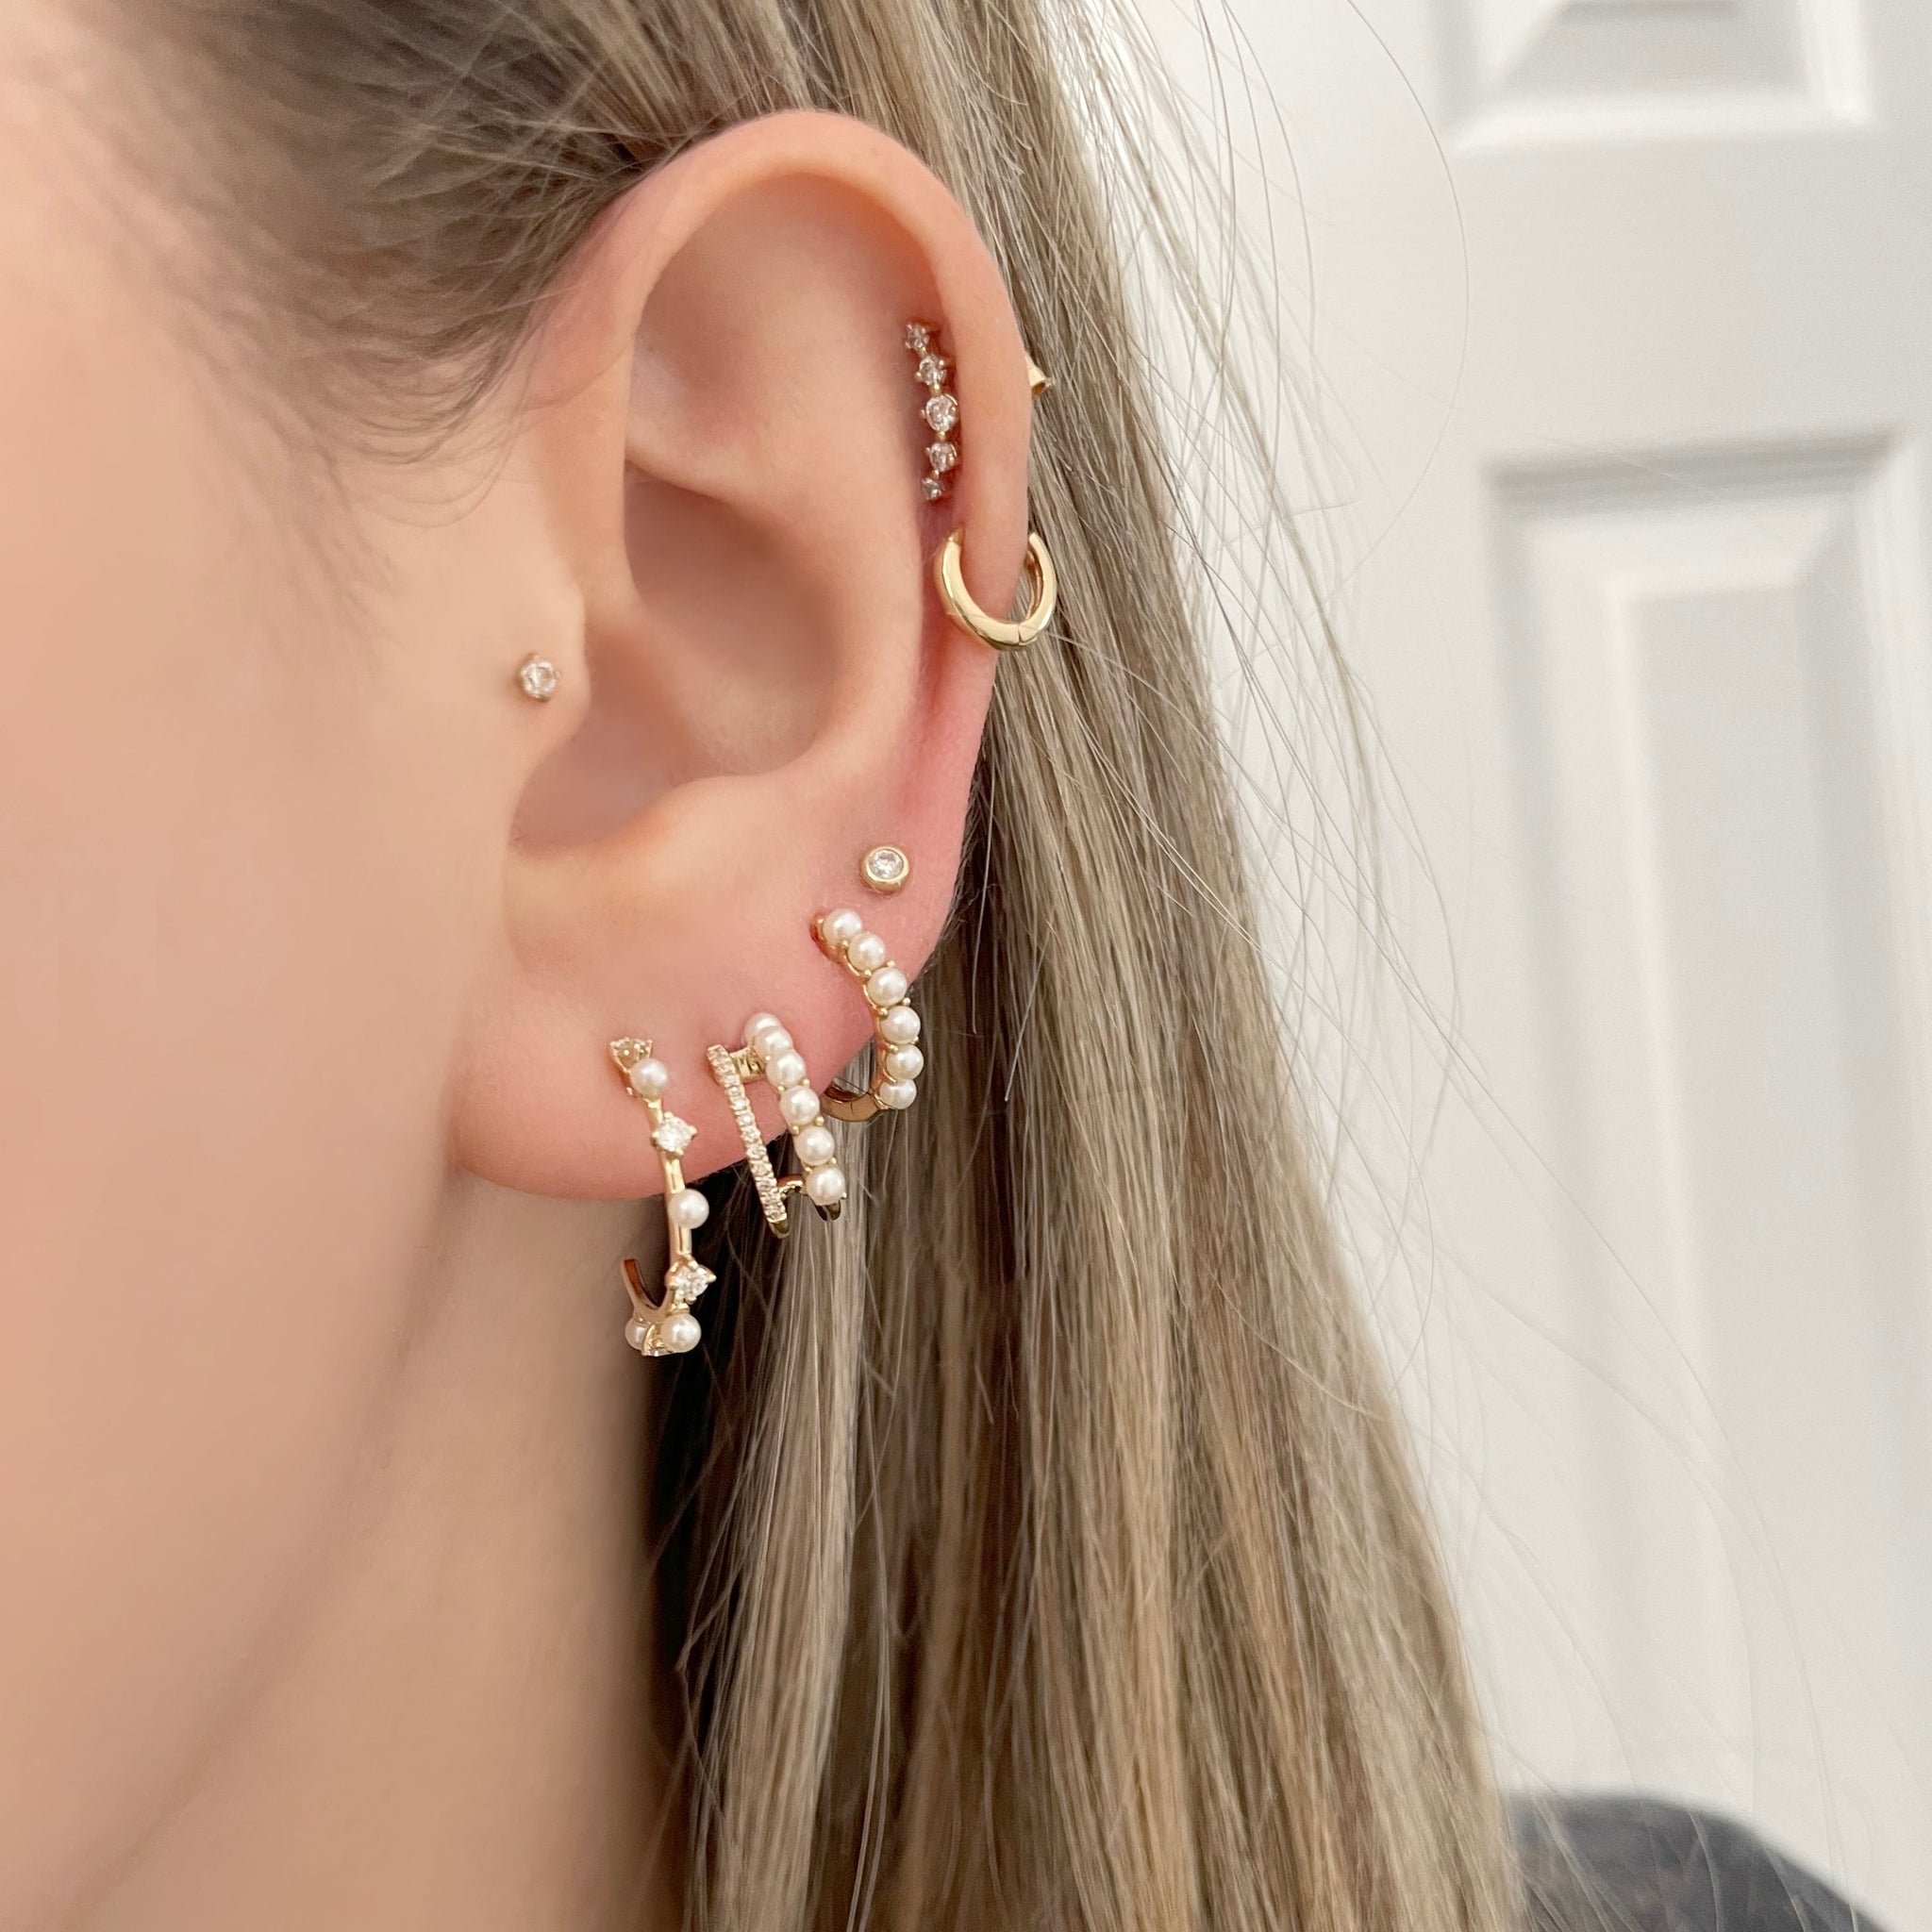 Perks and Mini Alien Kiss Earring - Silver | Garmentory